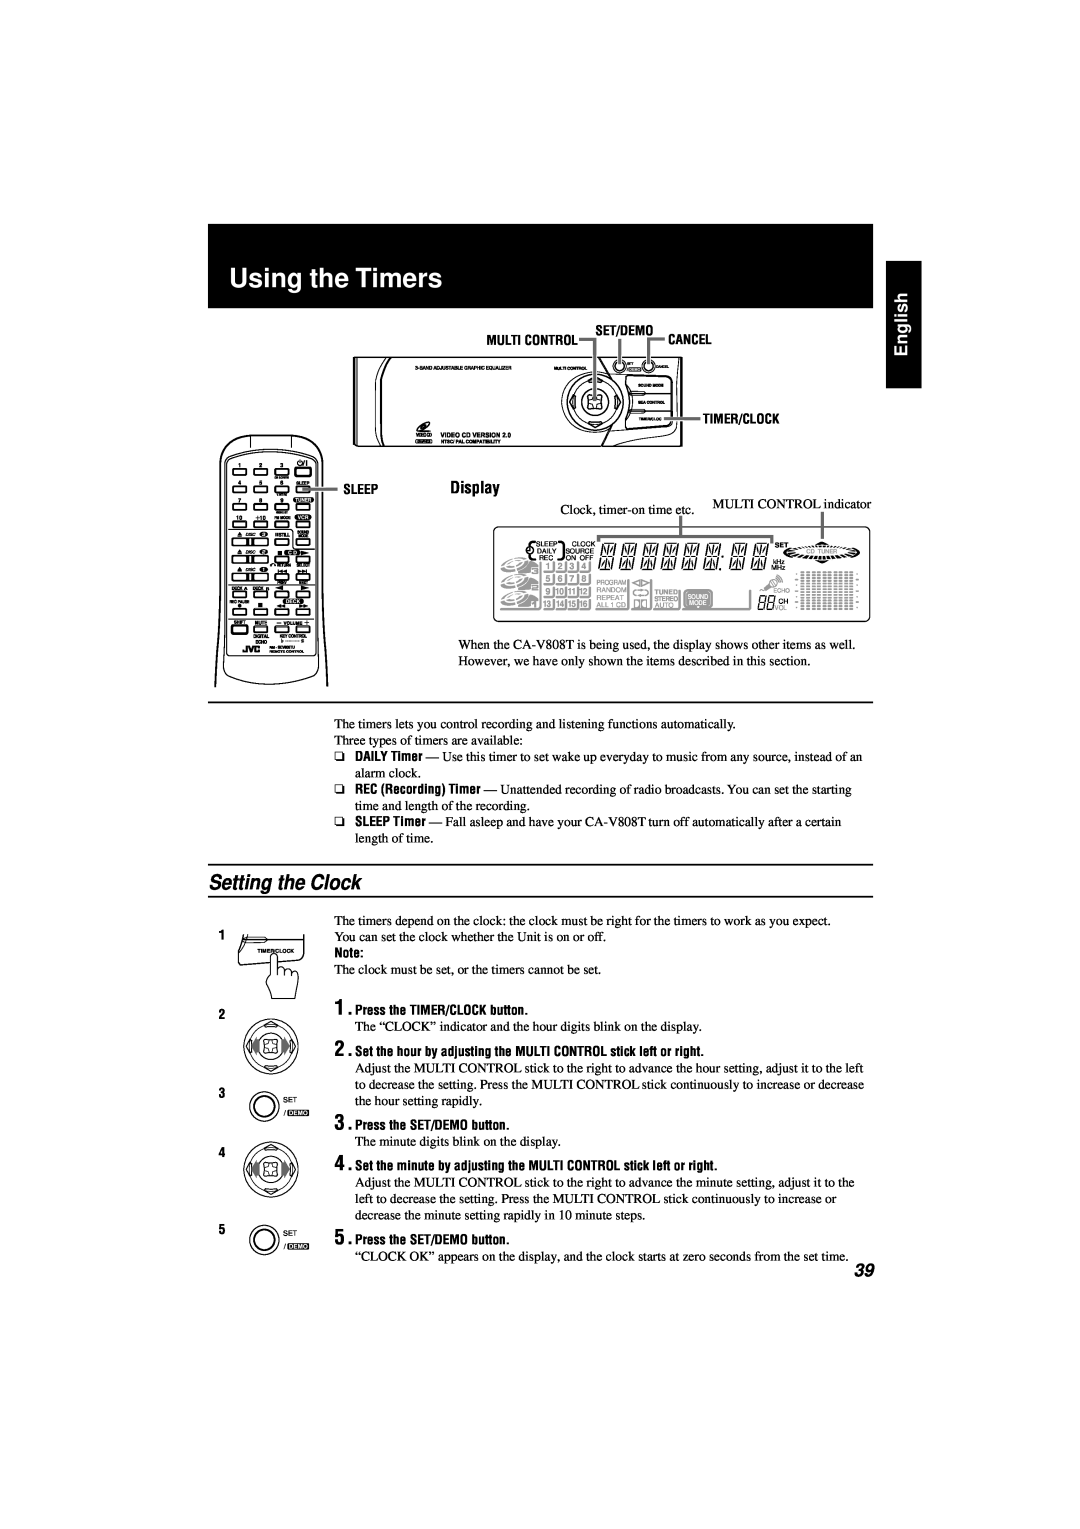 JVC CA-V808T manual Using the Timers, Setting the Clock, English, Display, Set/Demo, Timer/Clock, Sleep 